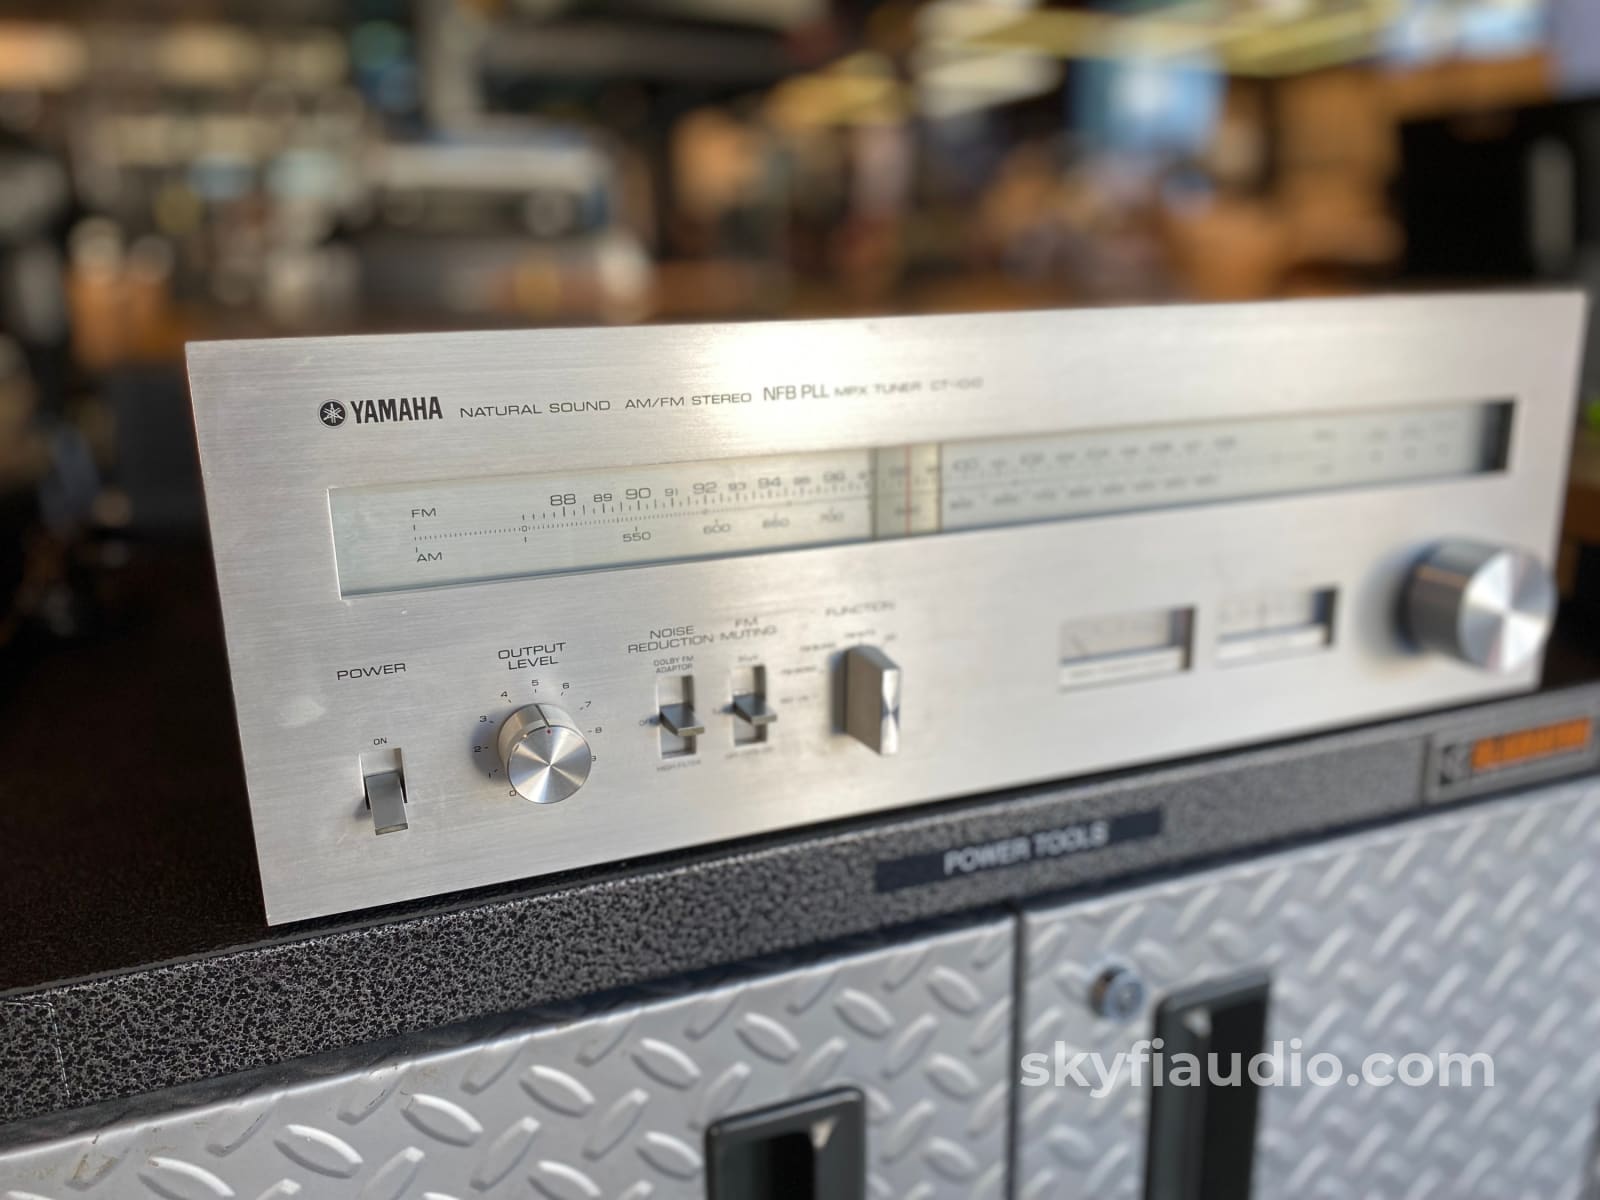 Yamaha CT-1010 Vintage AM/FM Tuner - Great Performer